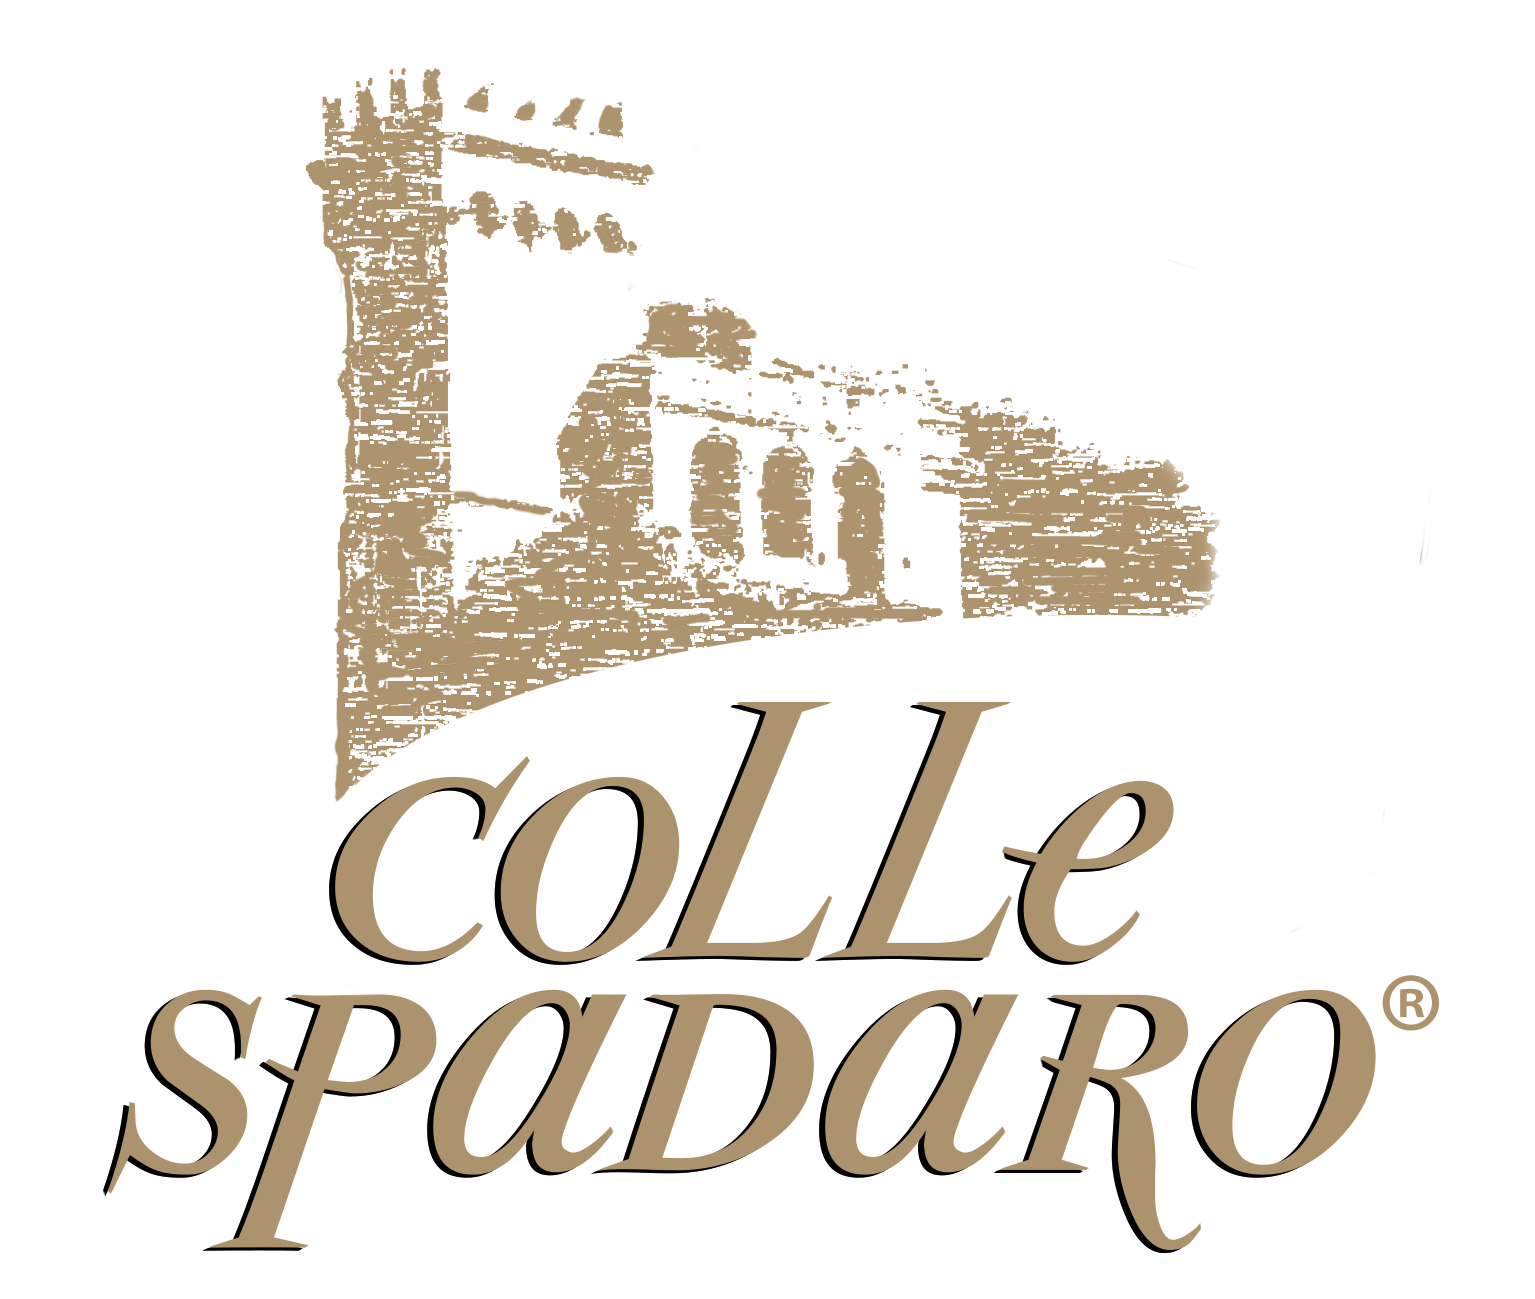 Colle Spadaro